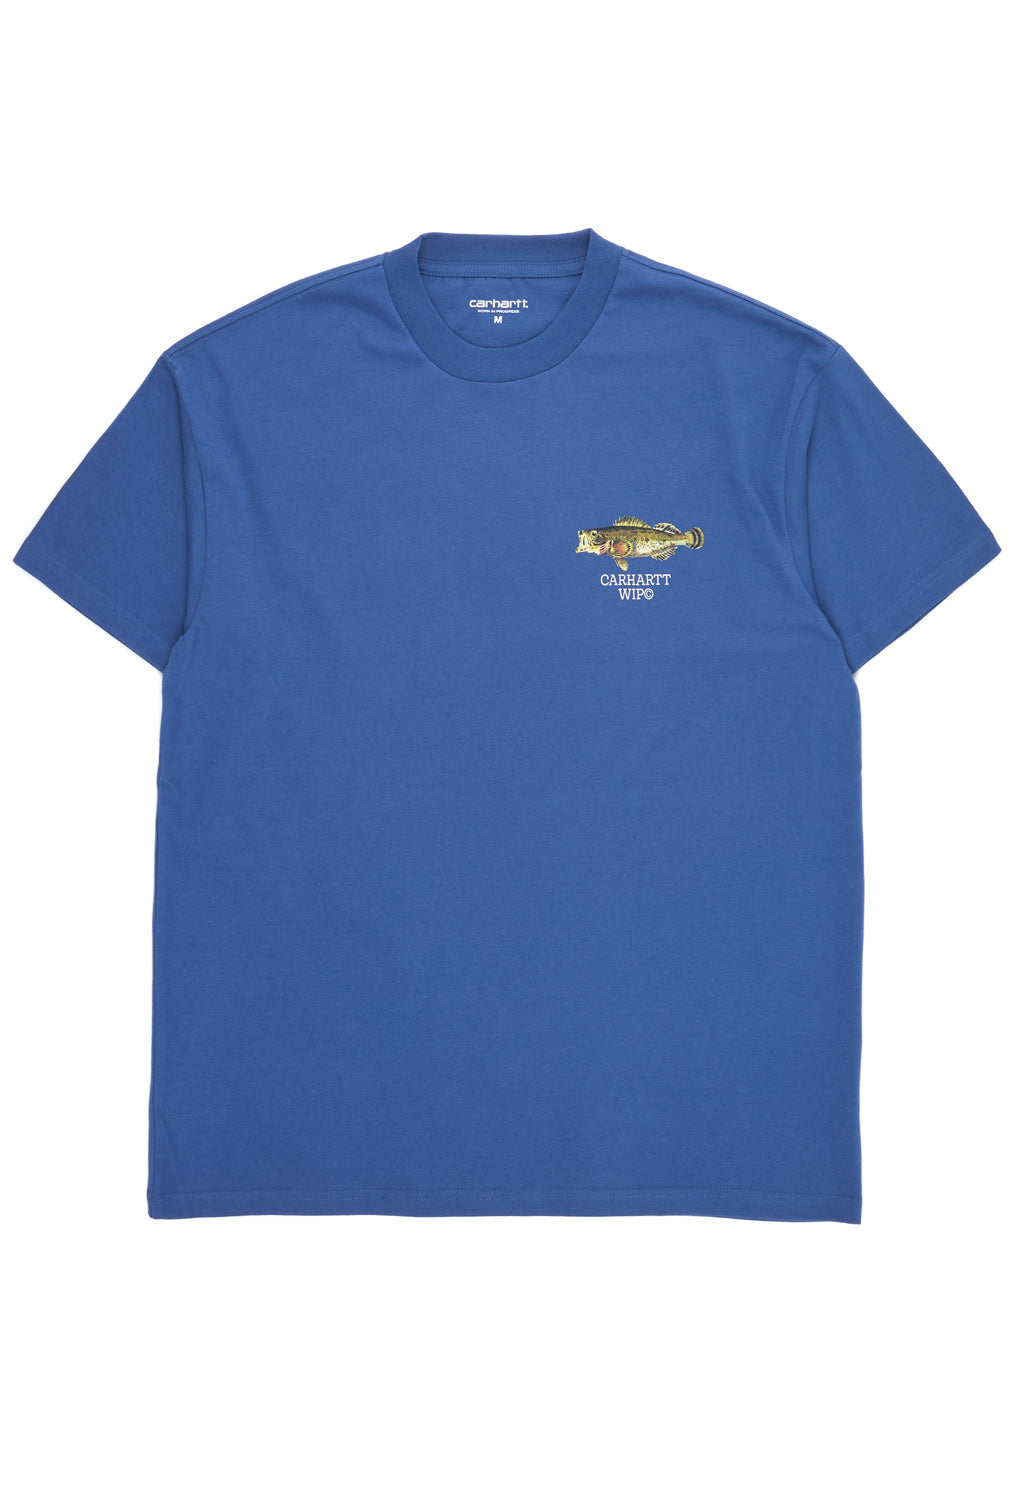 Carhartt WIP Men's Fish T-Shirt - Acapulco